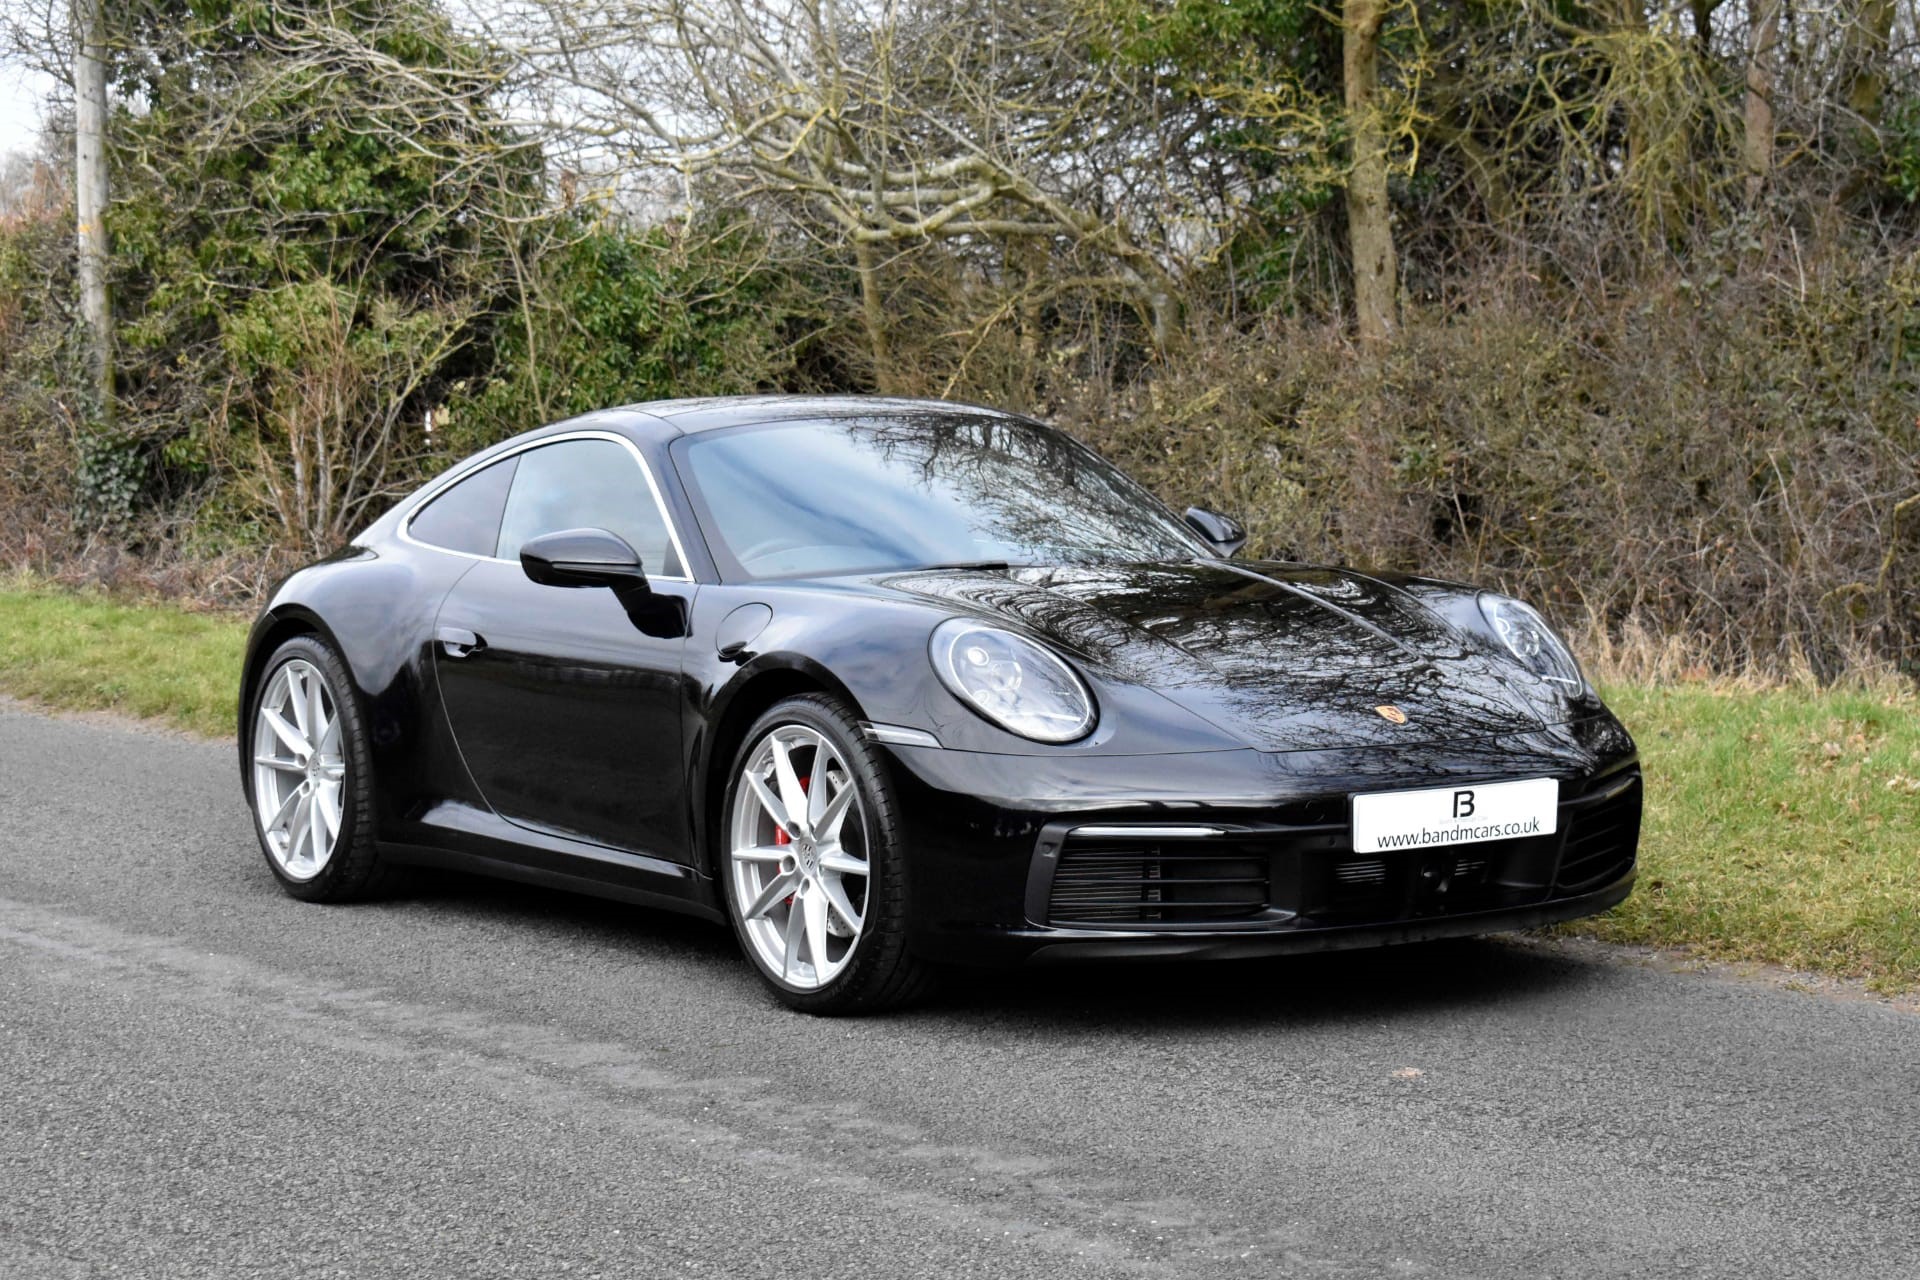 Used Porsche 911 for sale in Warwickshire | B & M Sports & Prestige Cars